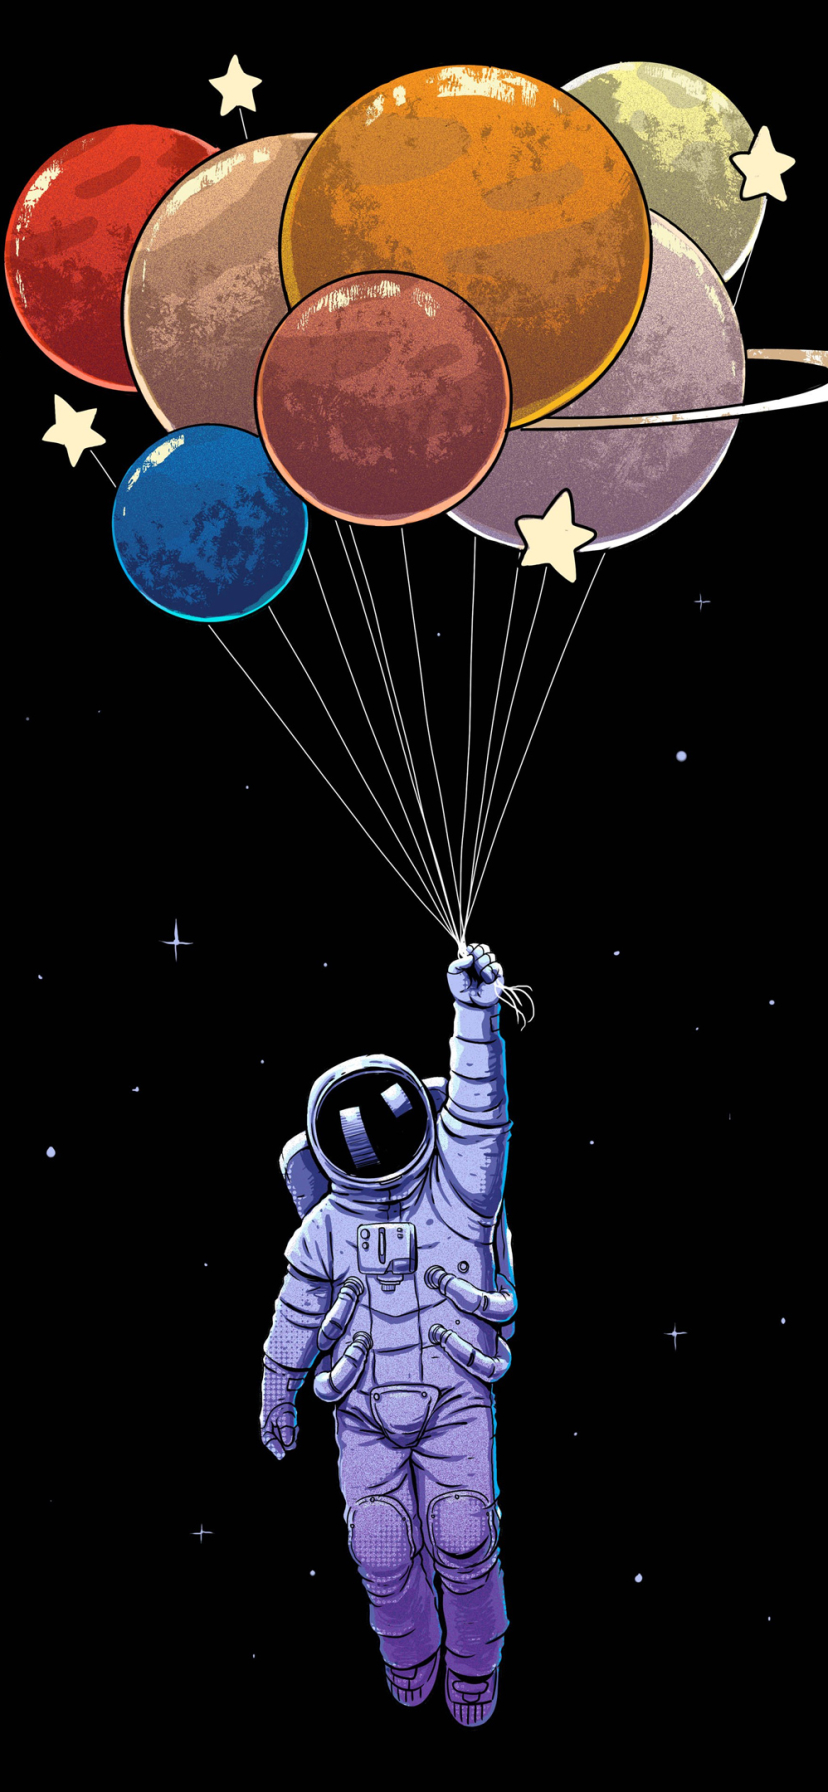 sci fi, astronaut, spacesuit, balloon images